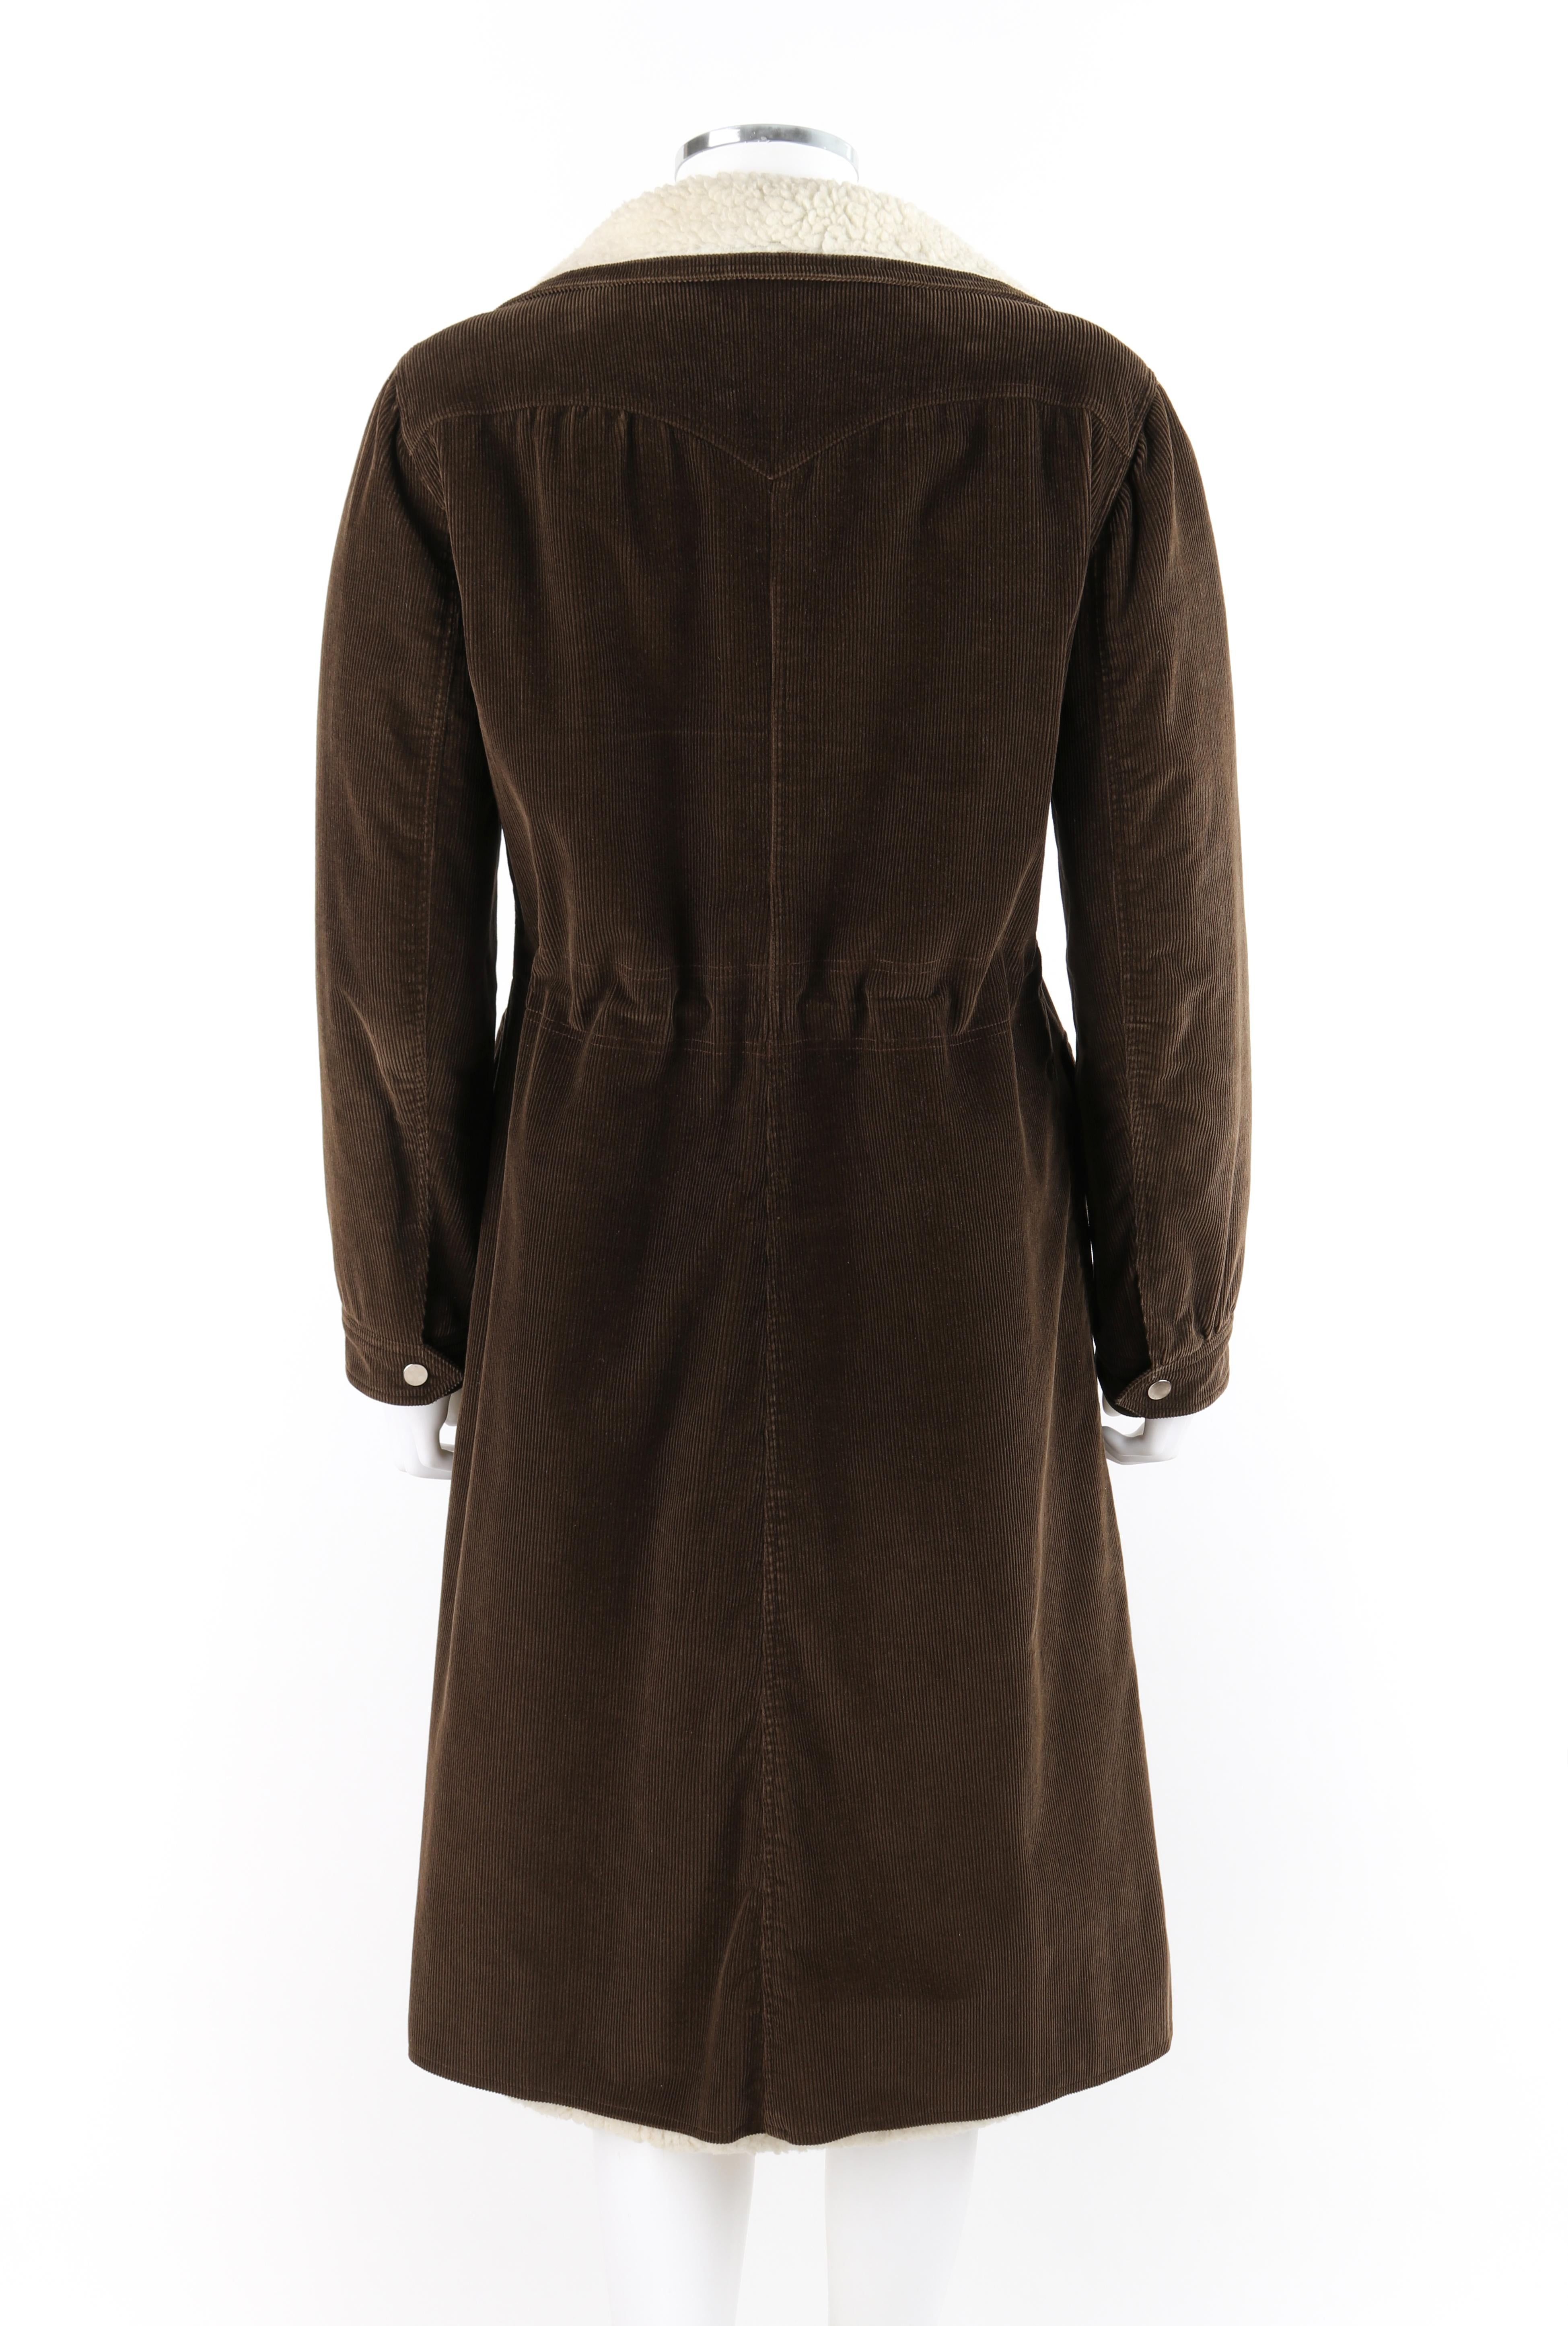 COURREGES Couture Future c.1970’s Brown Corduroy Cinched Waist Long Coat Jacket For Sale 1